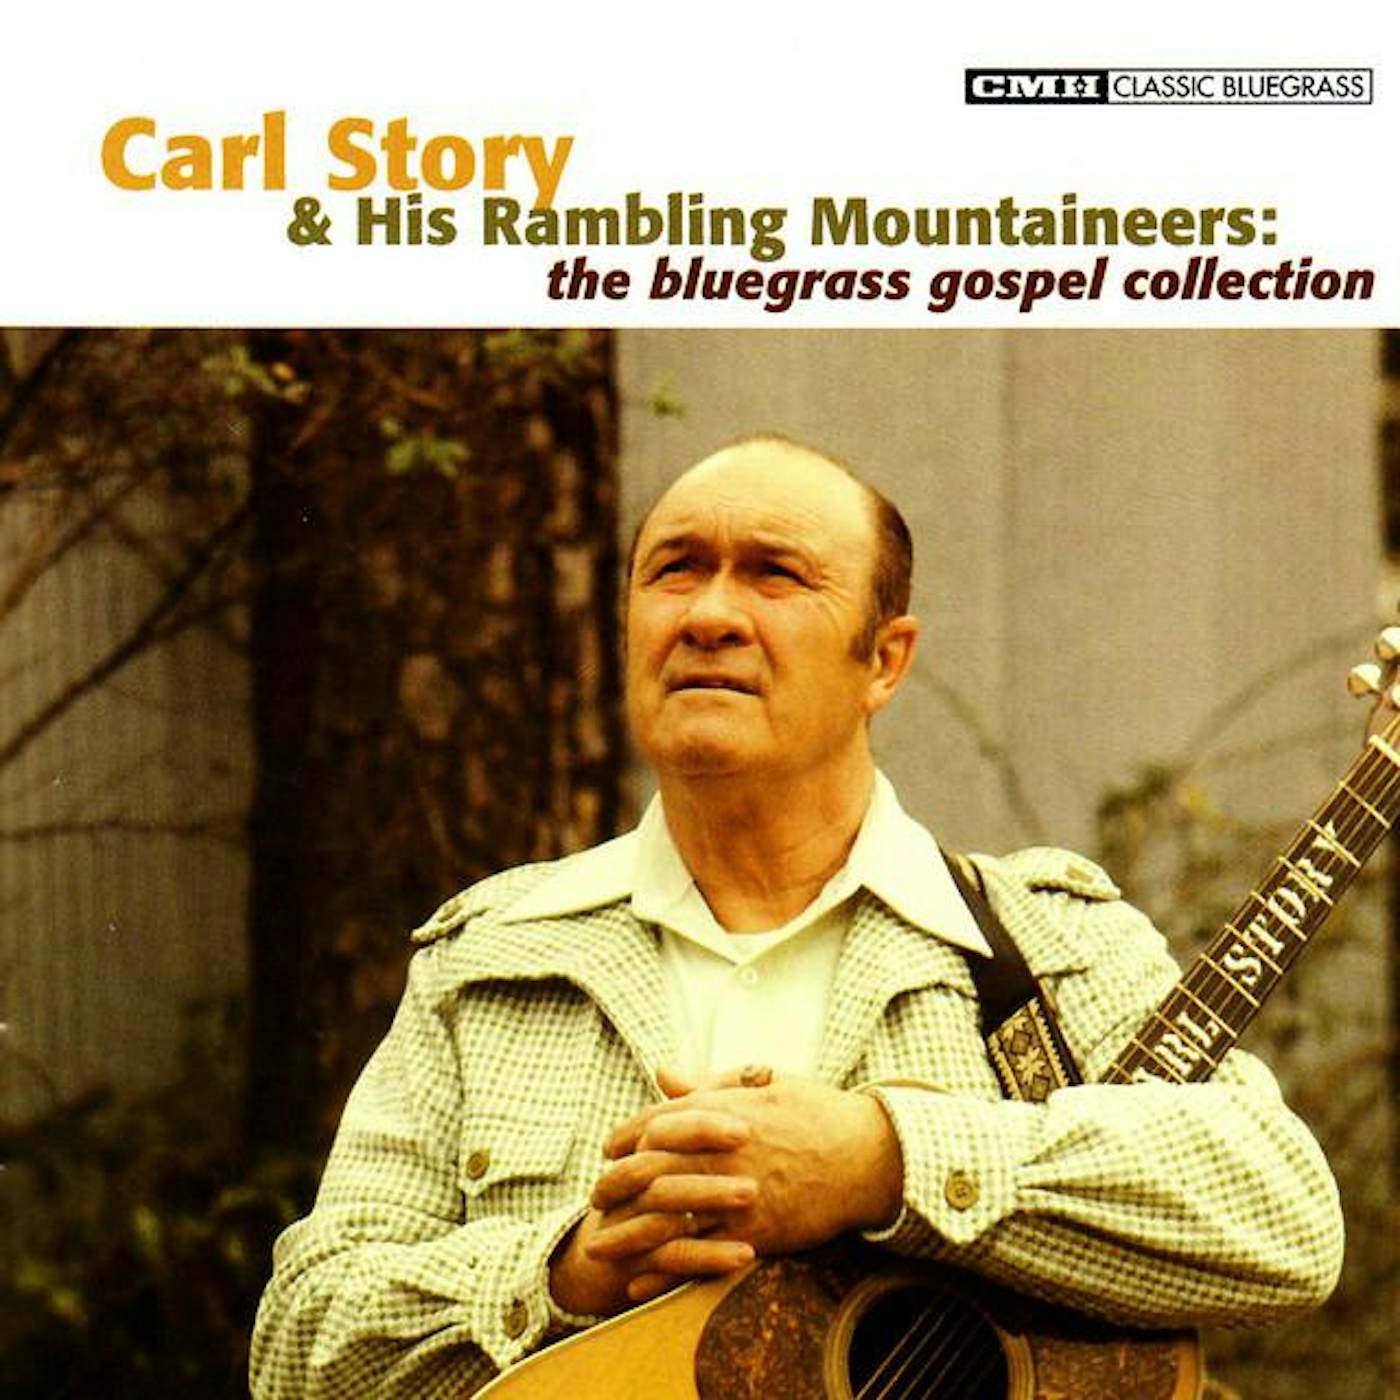 Carl Story & His Rambling Mountaineers